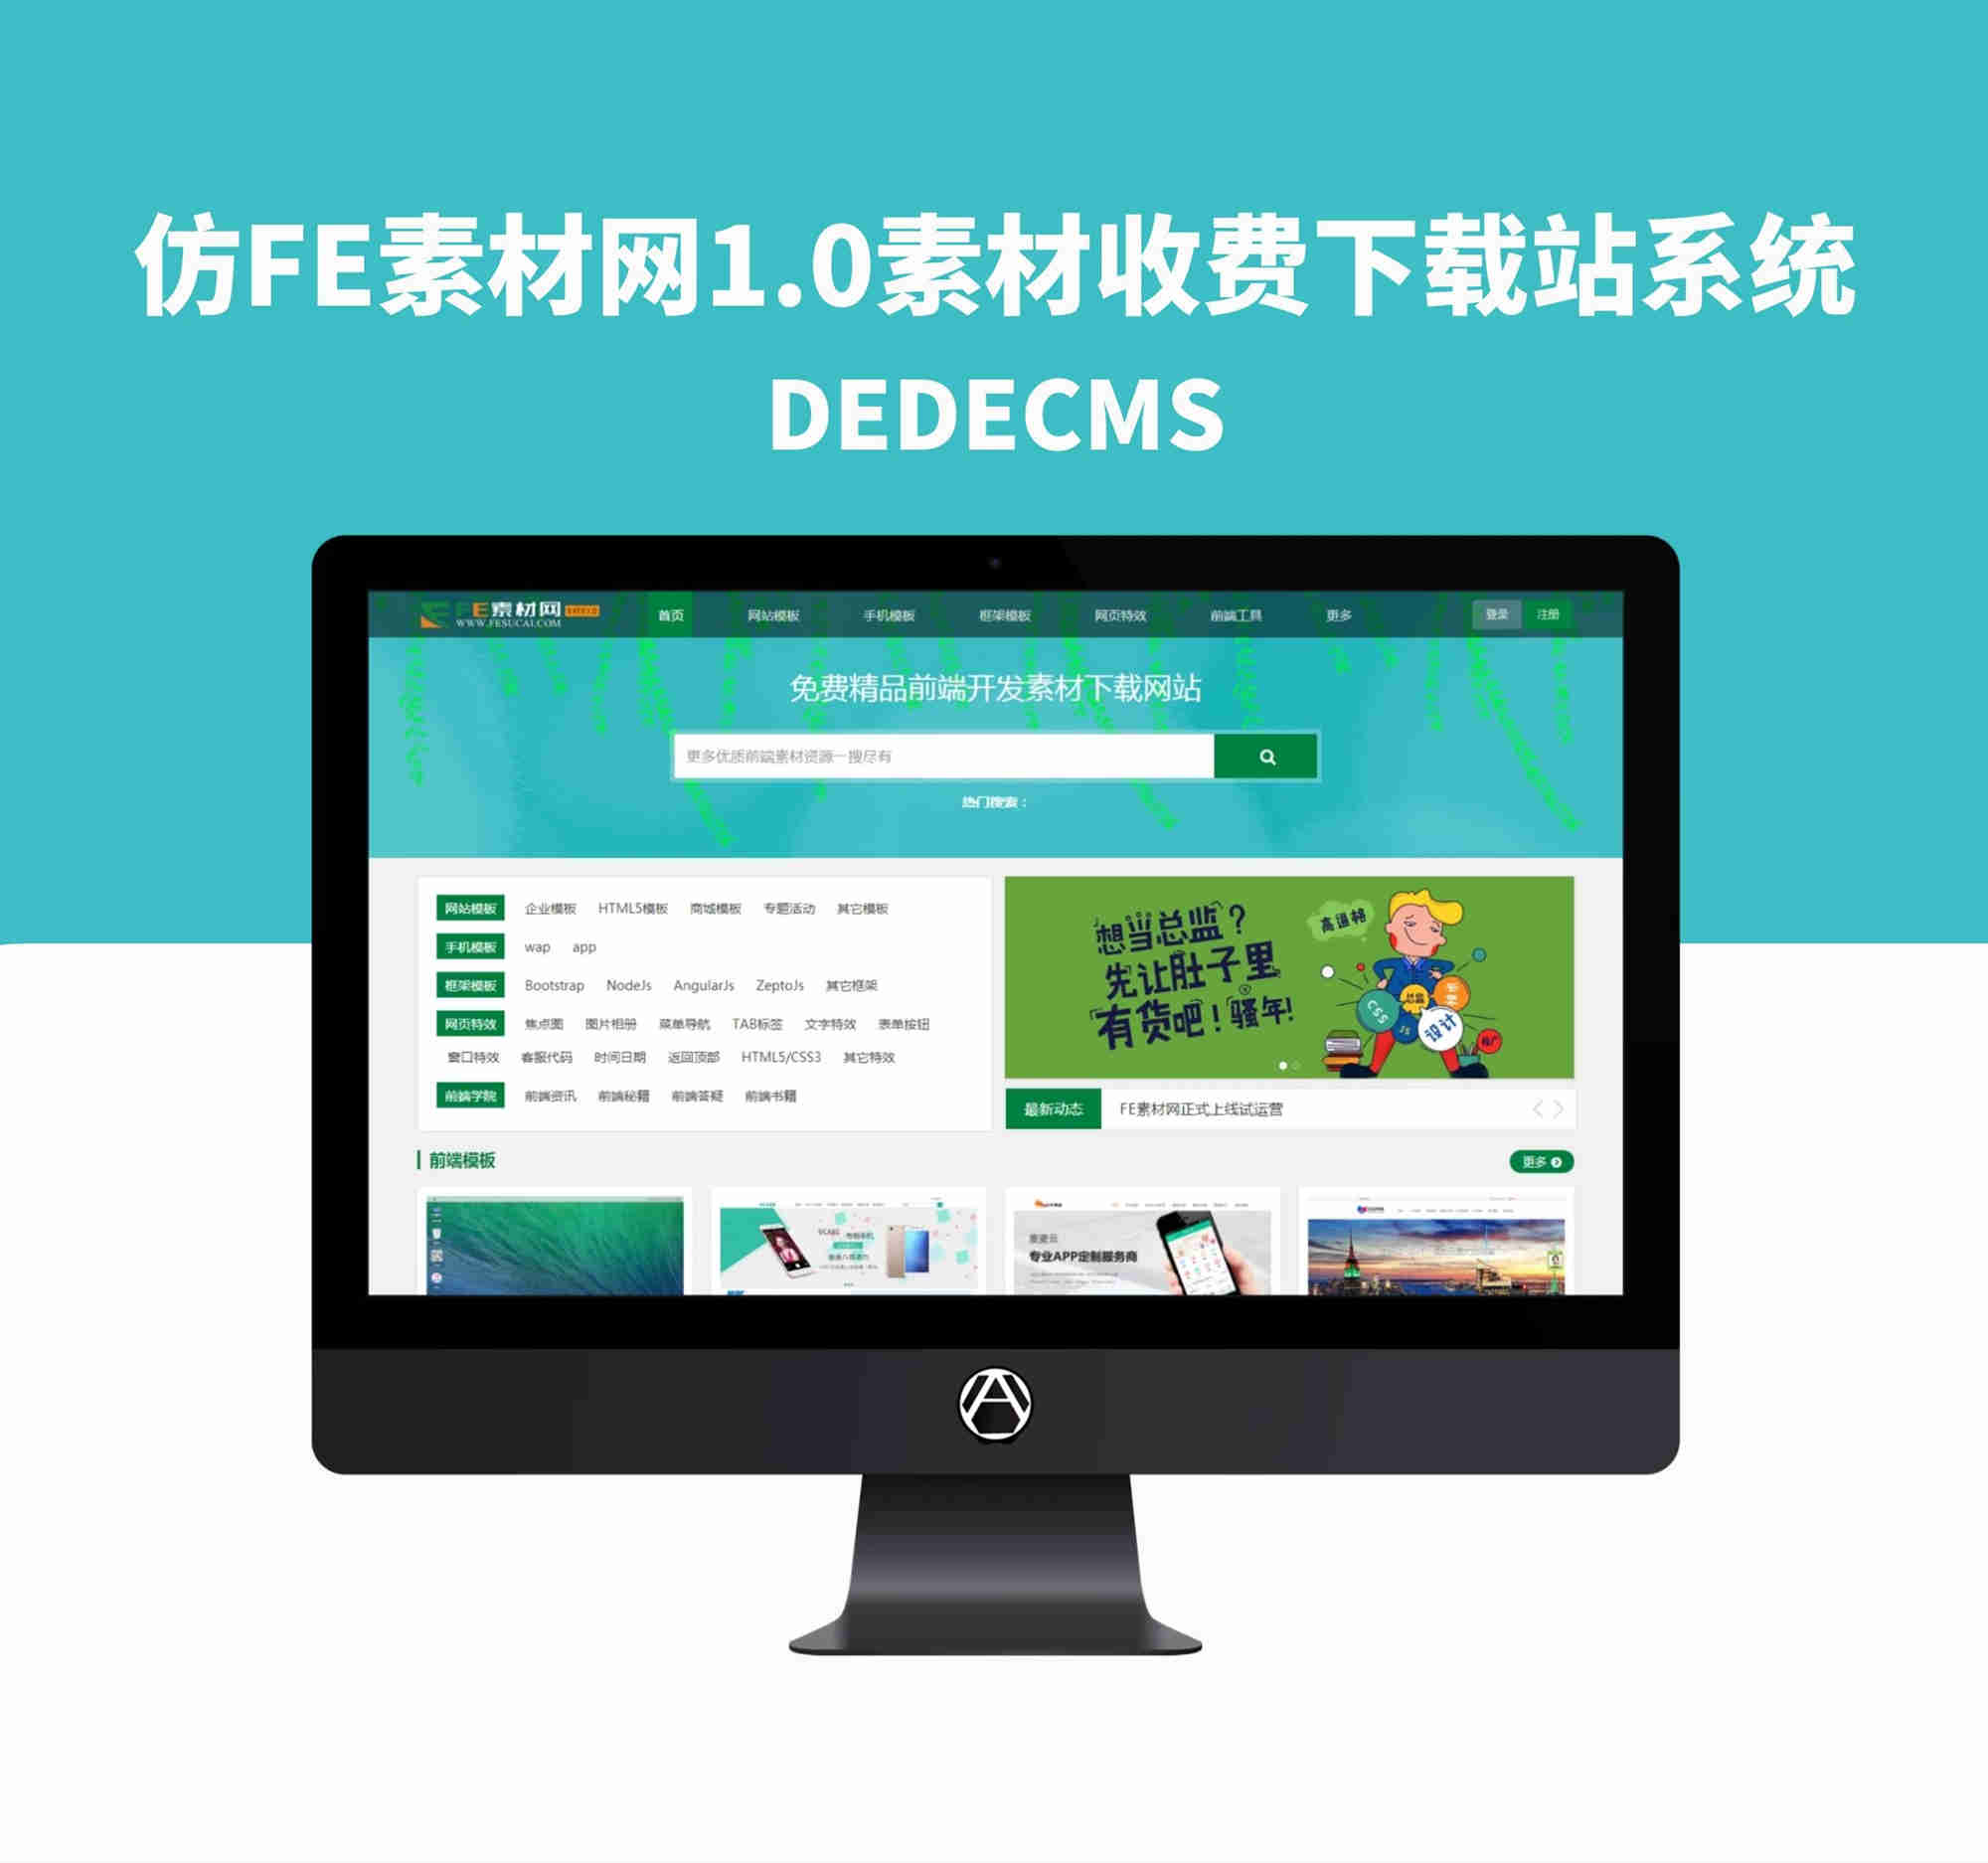 dedeCMS高仿FE素材网1.0虚拟素材资源收费下载站系统